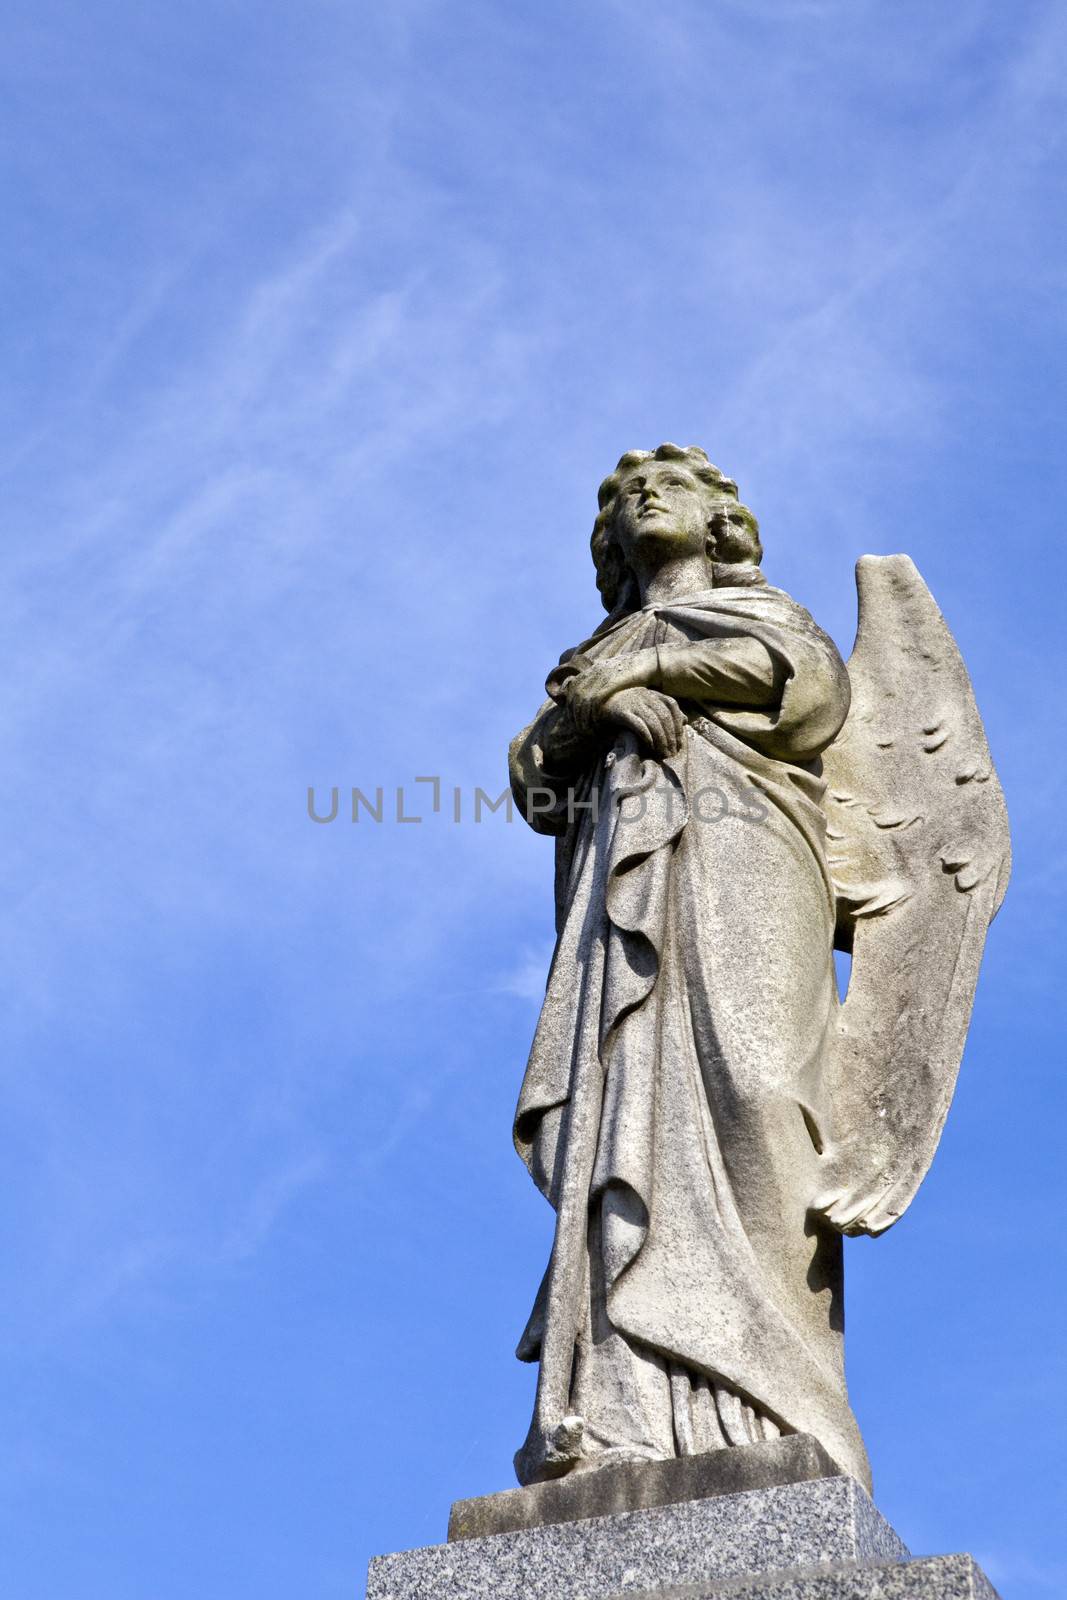 Graveyard Angel by chrisdorney